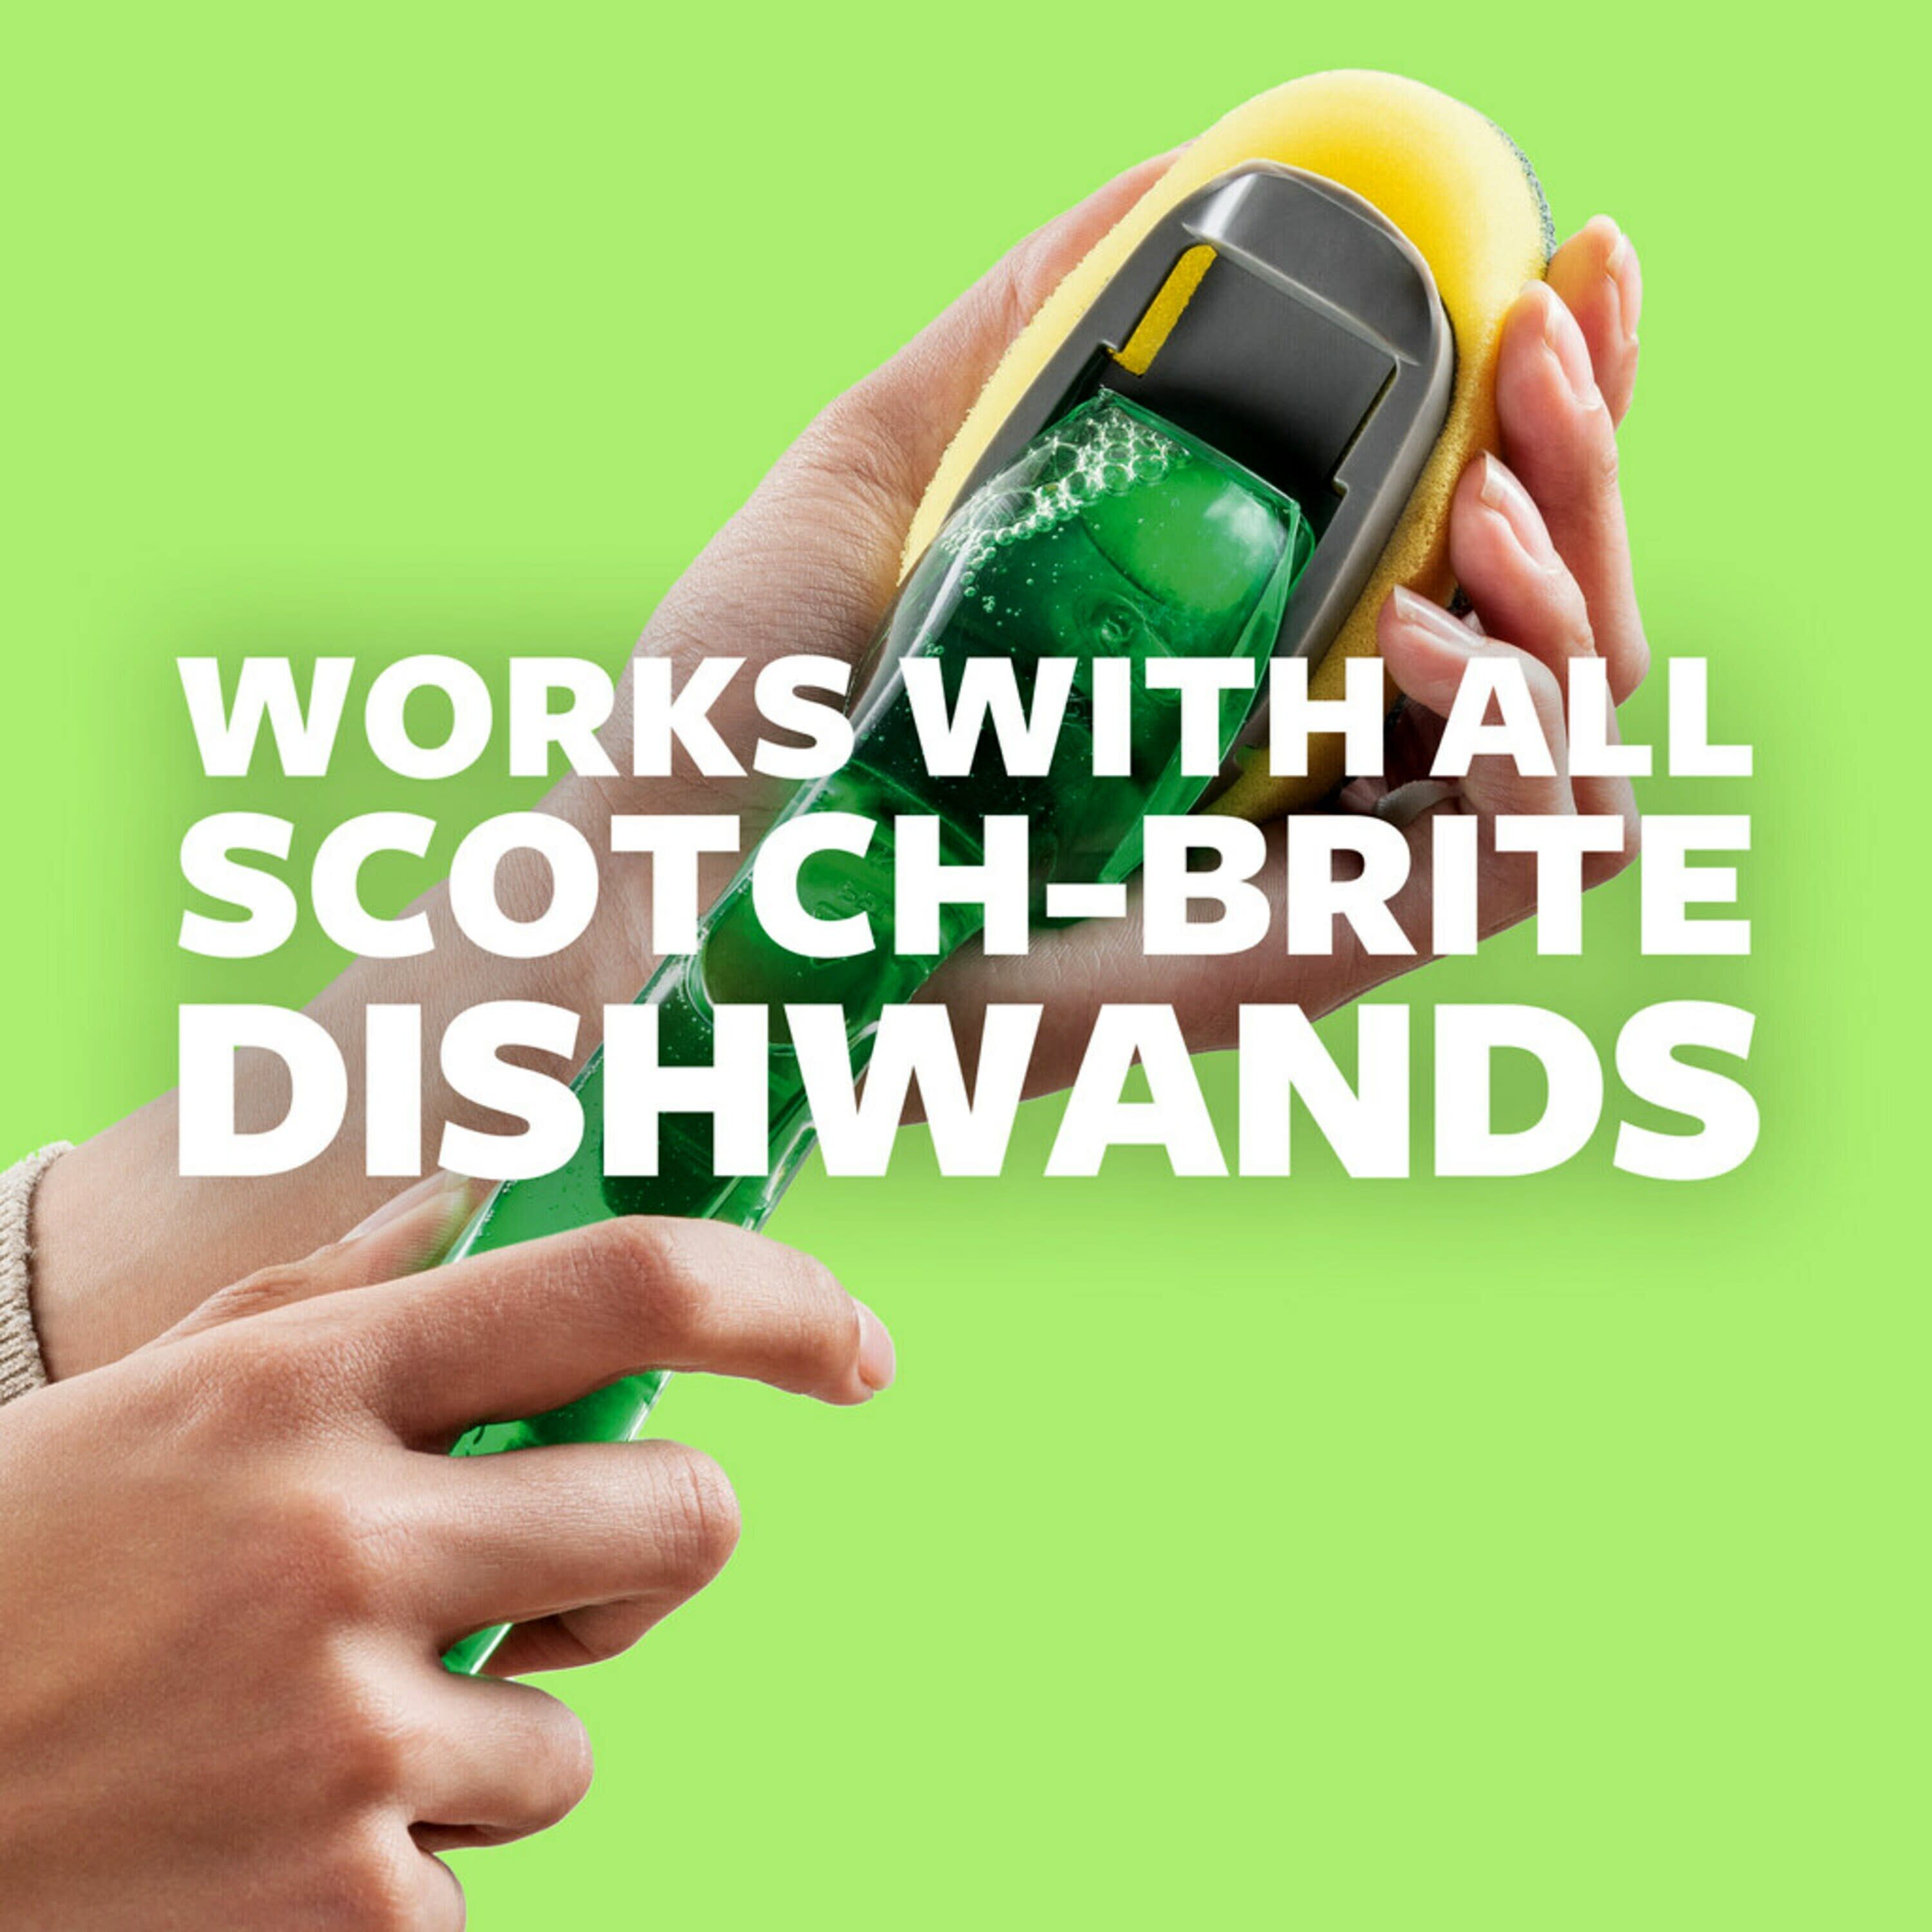 Scotch-Brite Heavy Duty 3-Pack Poly Fiber Dish Wand Refill